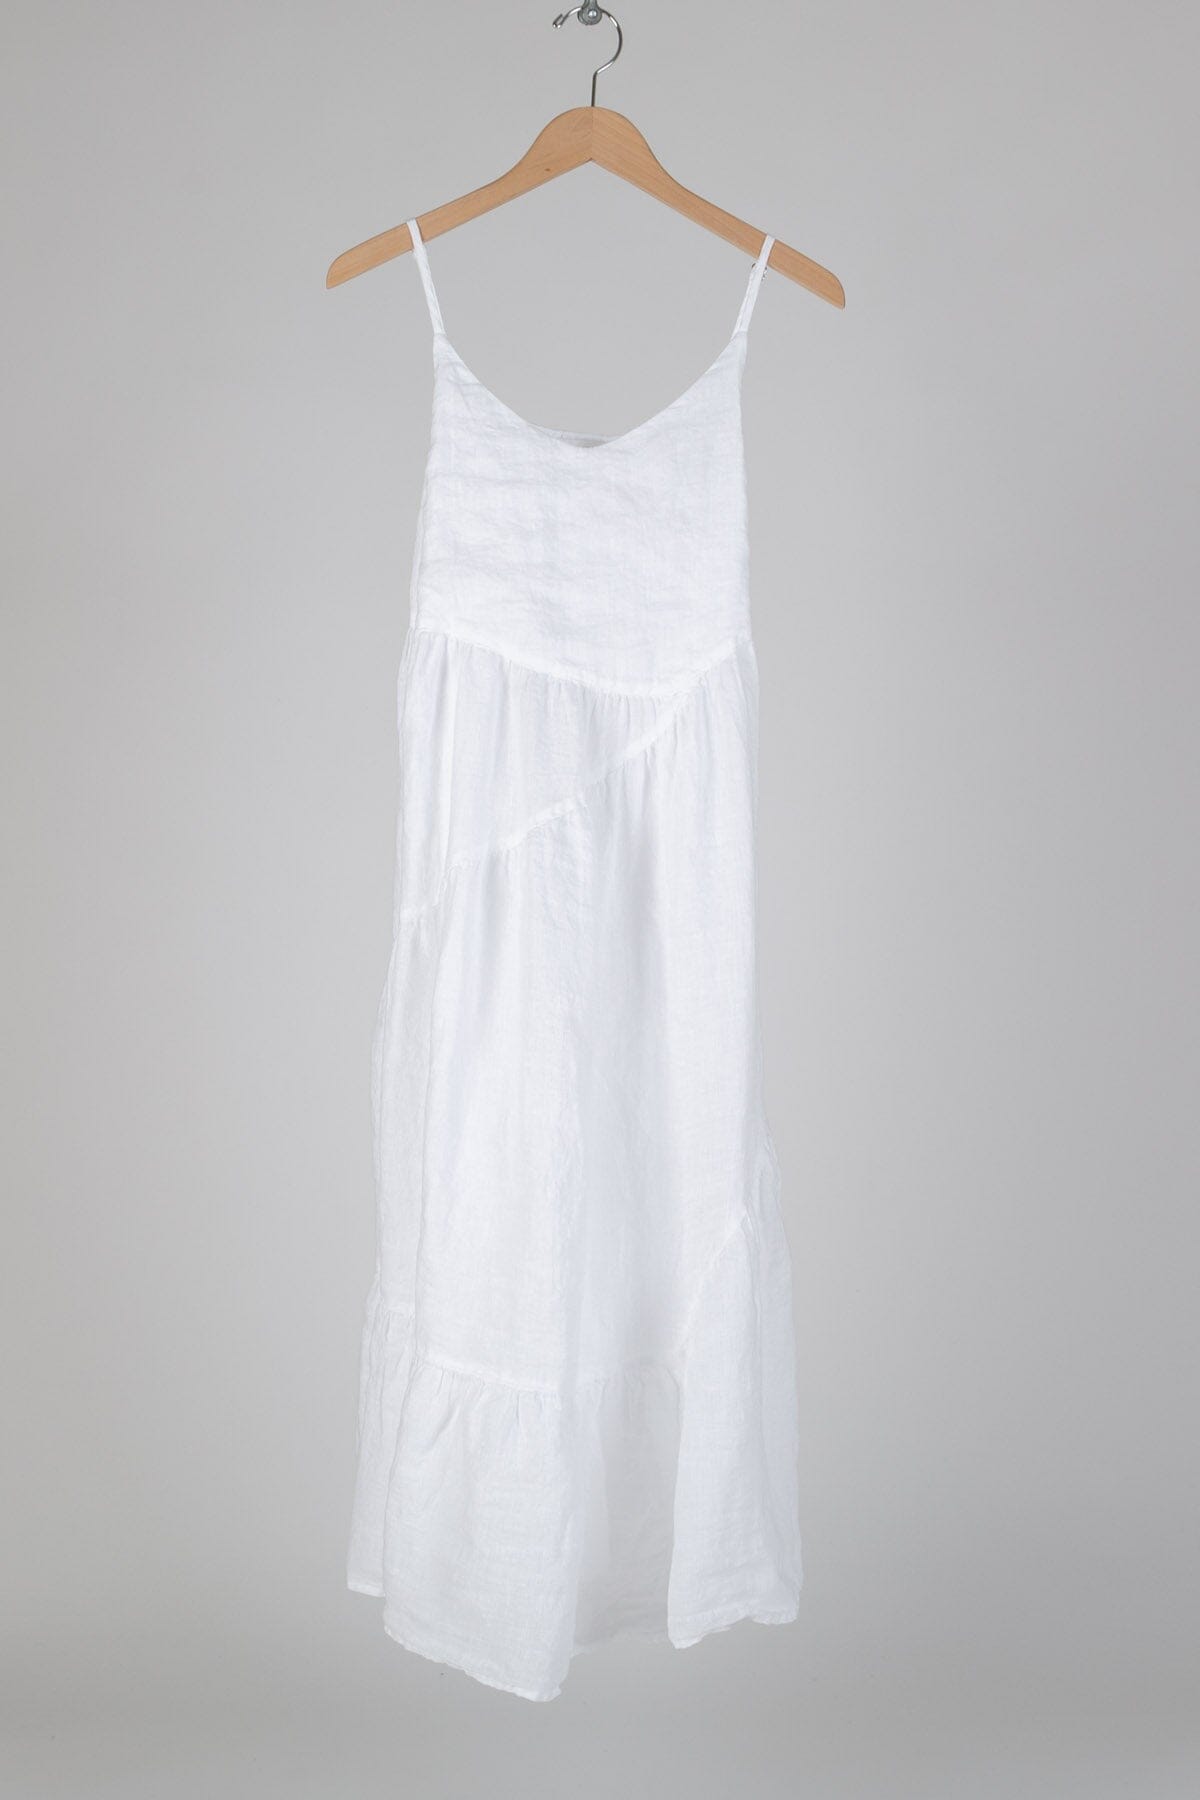 Sandrine - Linen S17 - Solid Linen Dresses CP Shades 